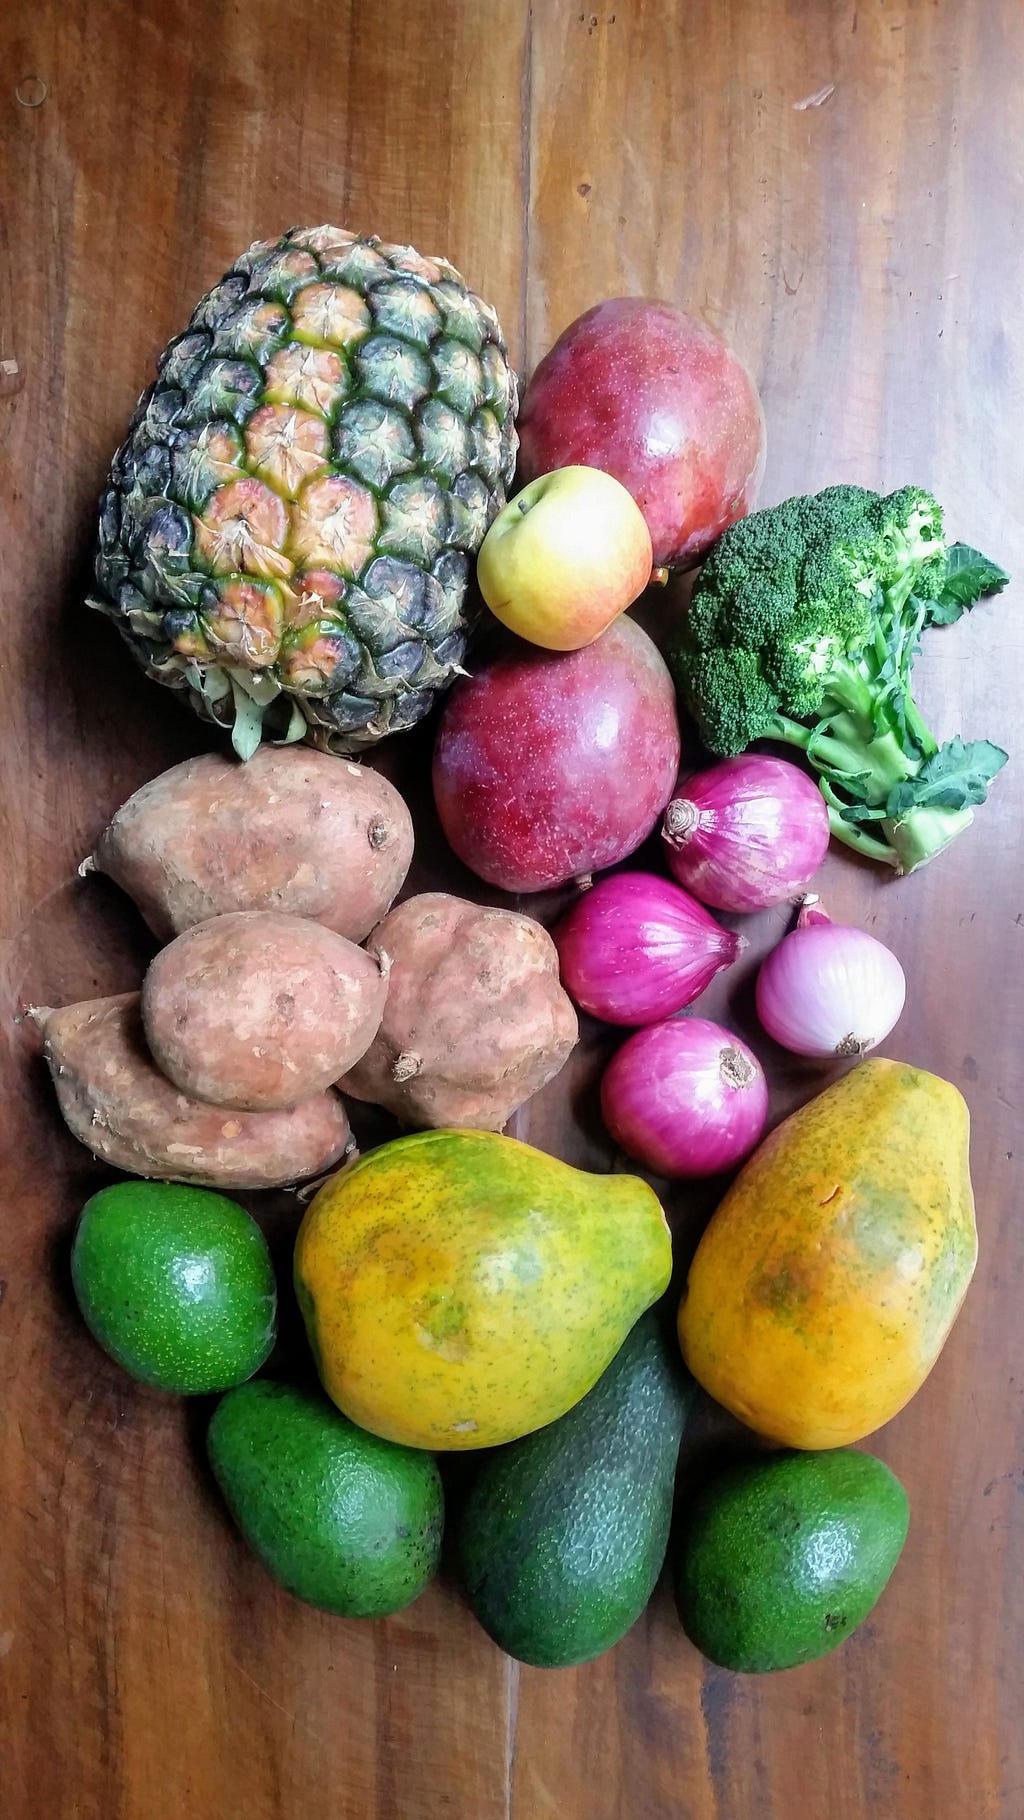 vegan in ecuador produce vegetables fruit